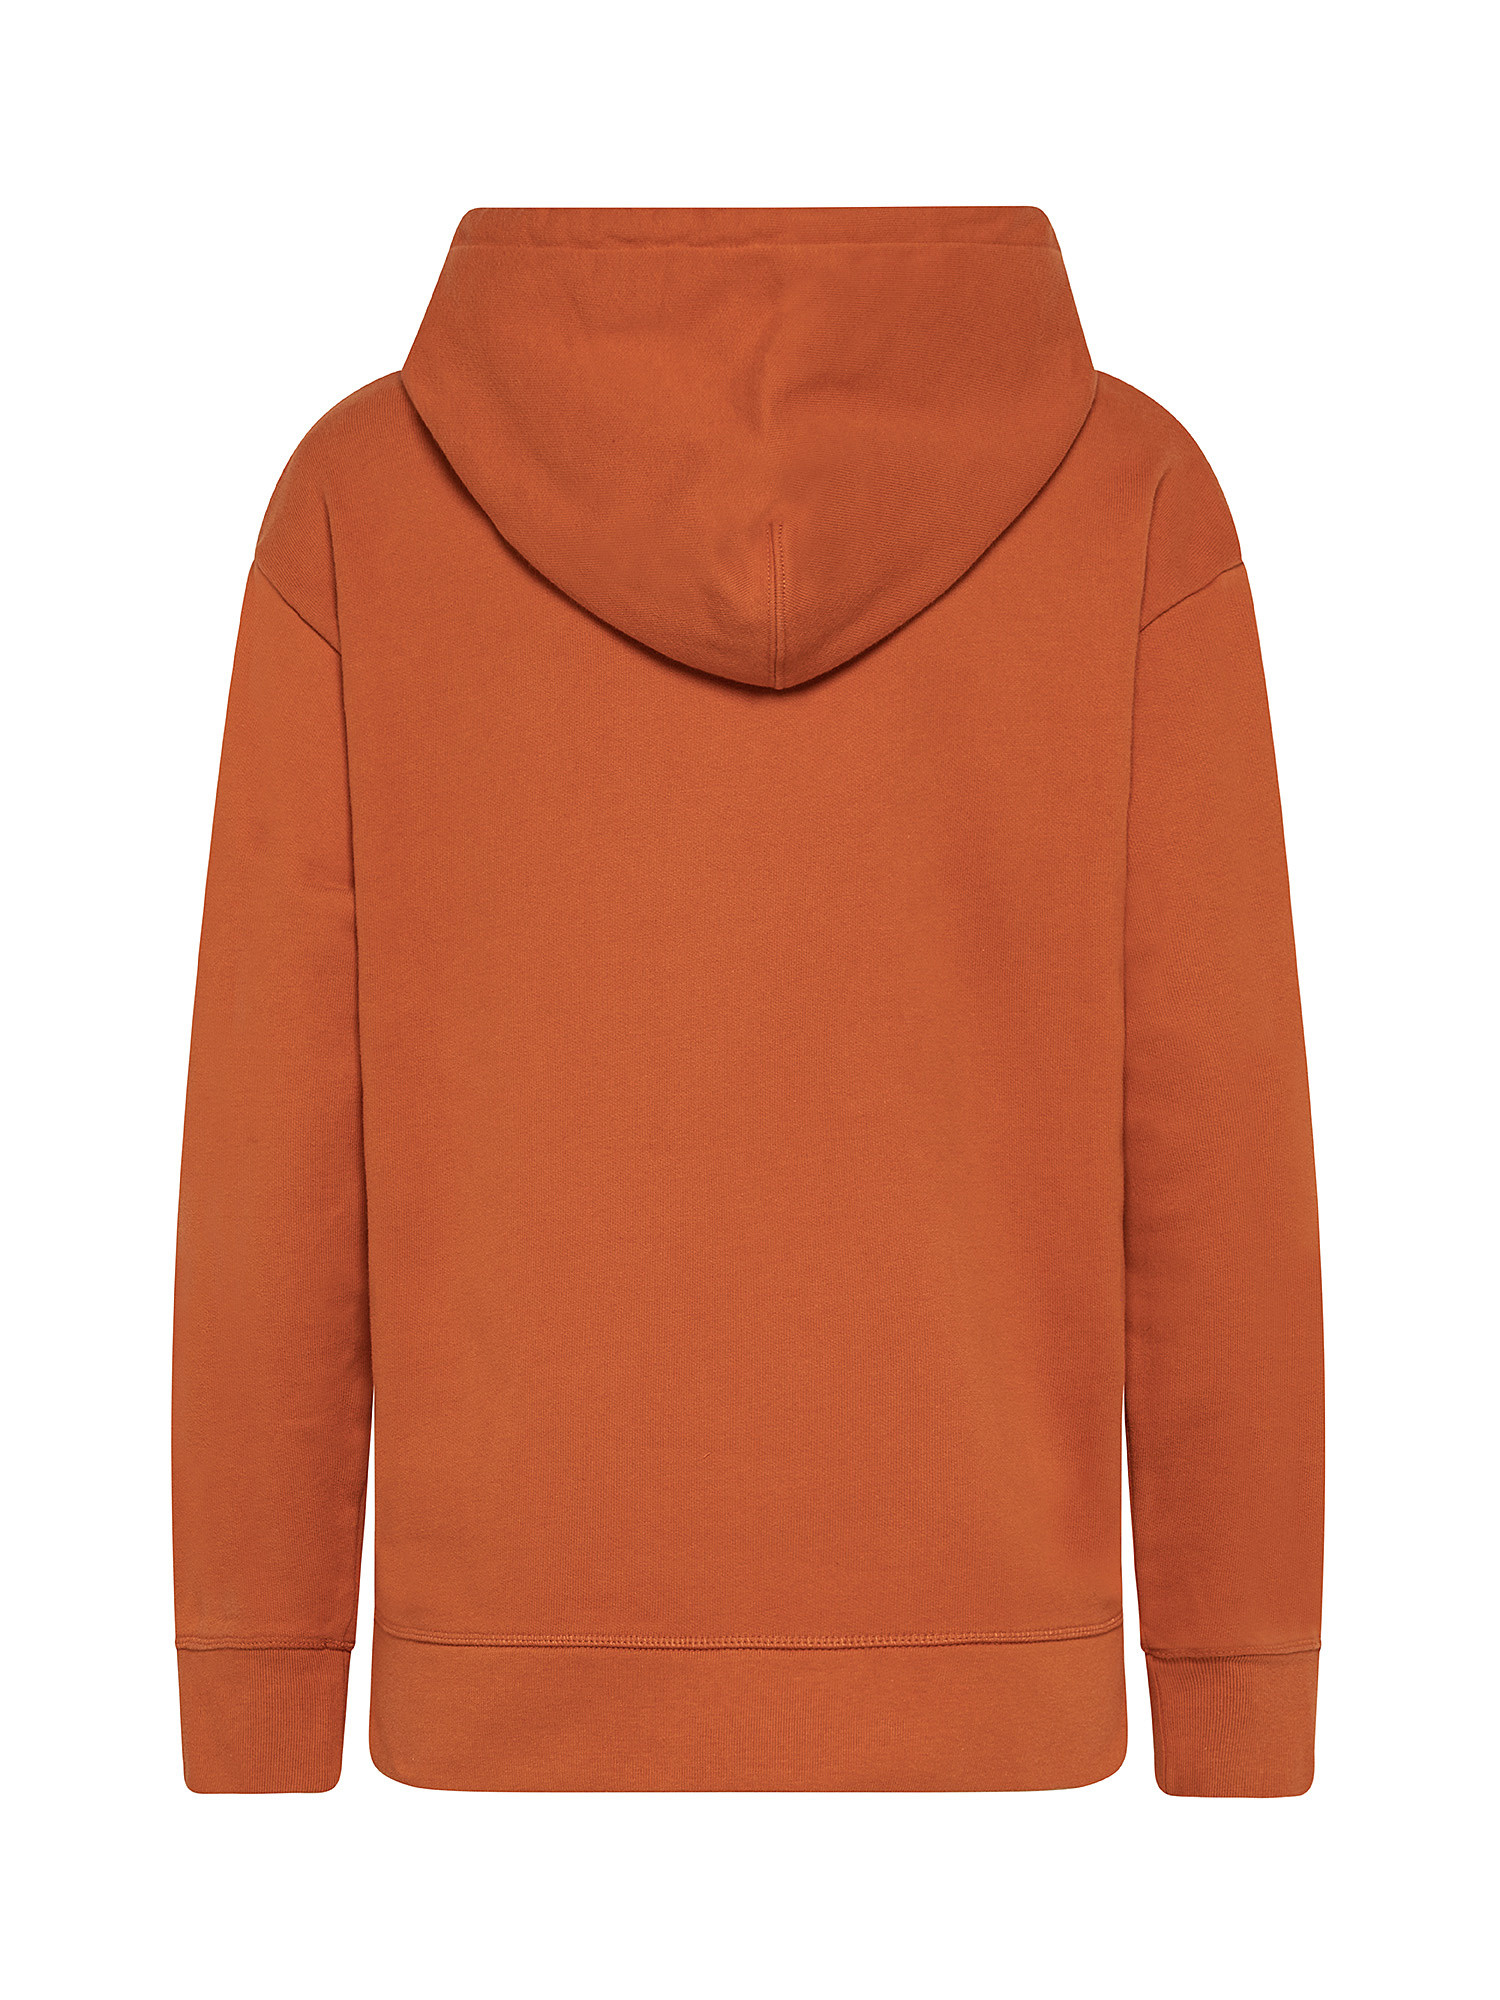 Sweatshirt with zip and hood, Orange, large image number 1